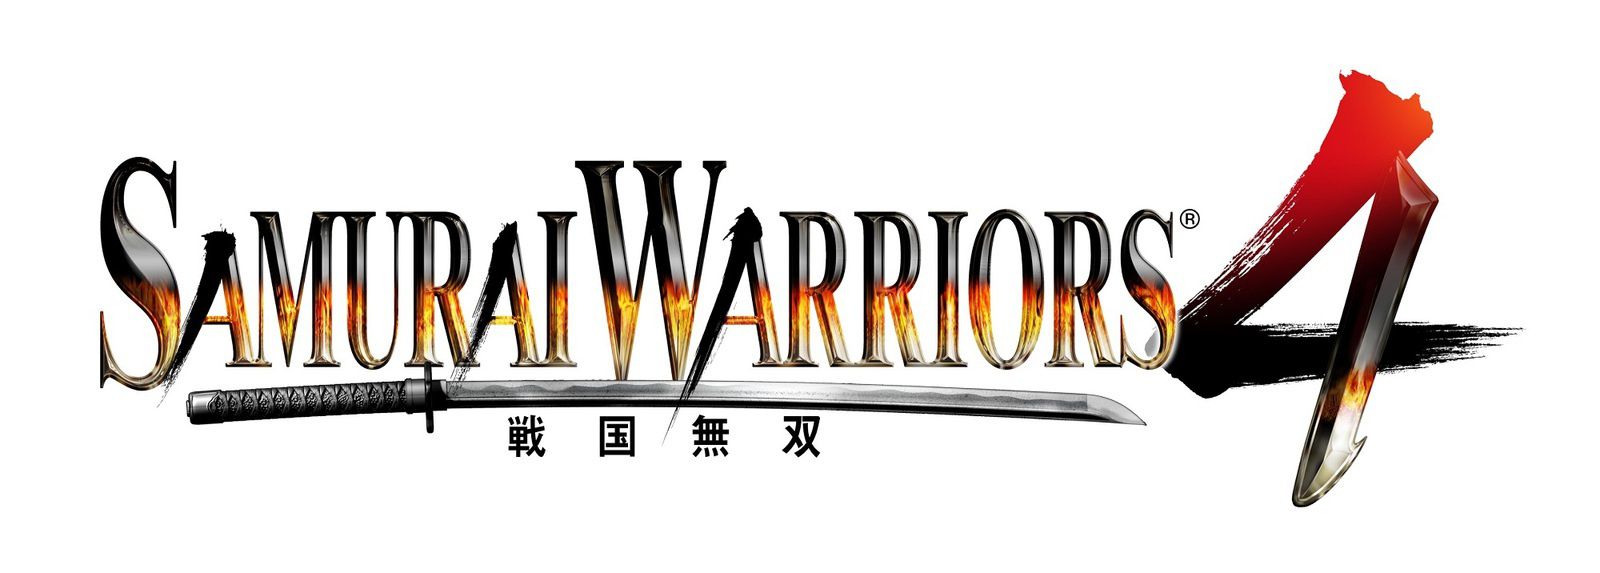 [CRITIQUE/TEST] Samurai Warriors 4 